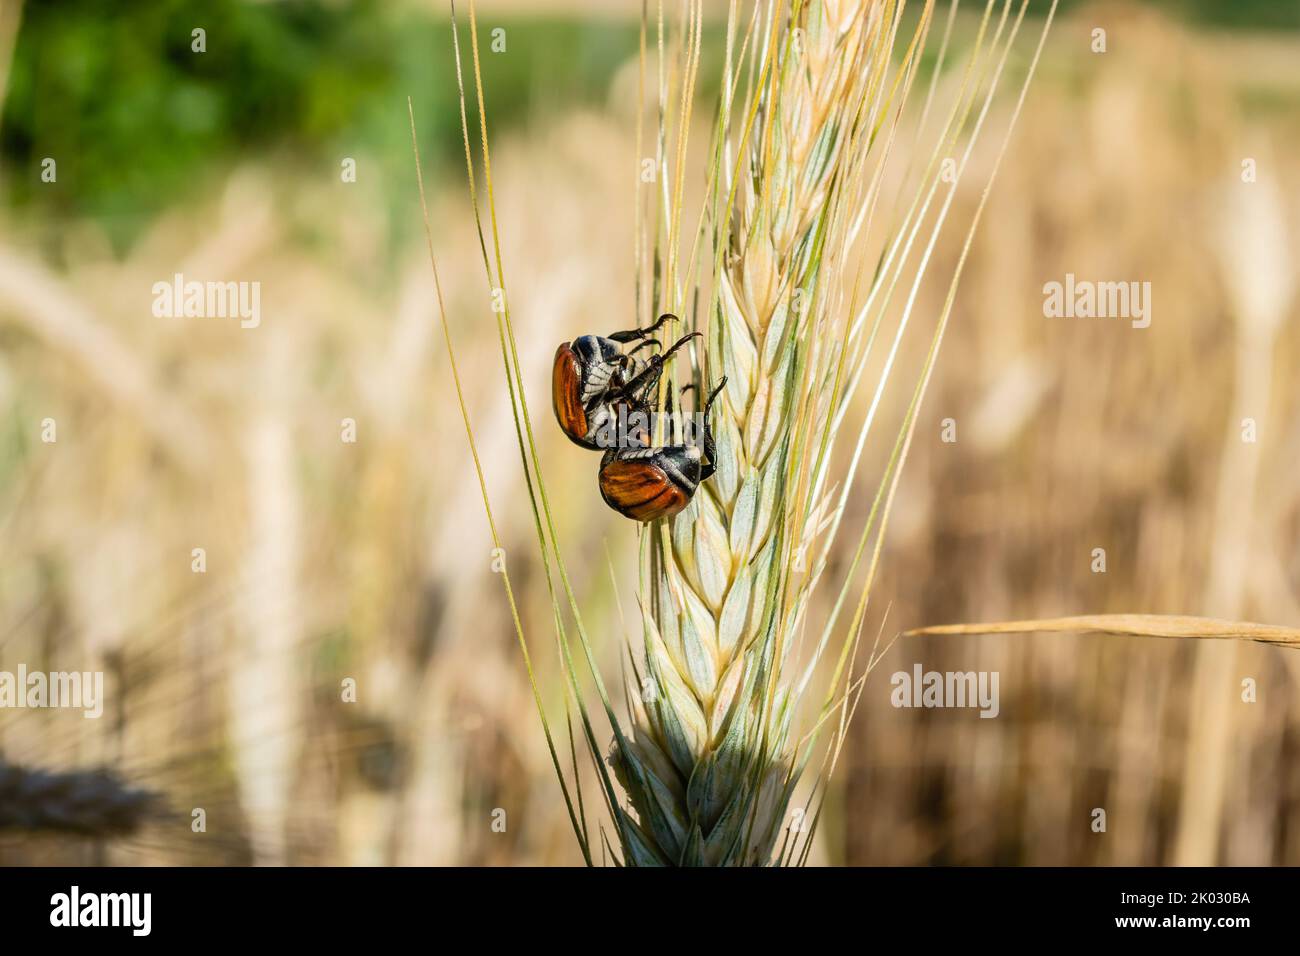 A close-up shot of Anisoplia austriacas on a wheat ear in the field Stock Photo